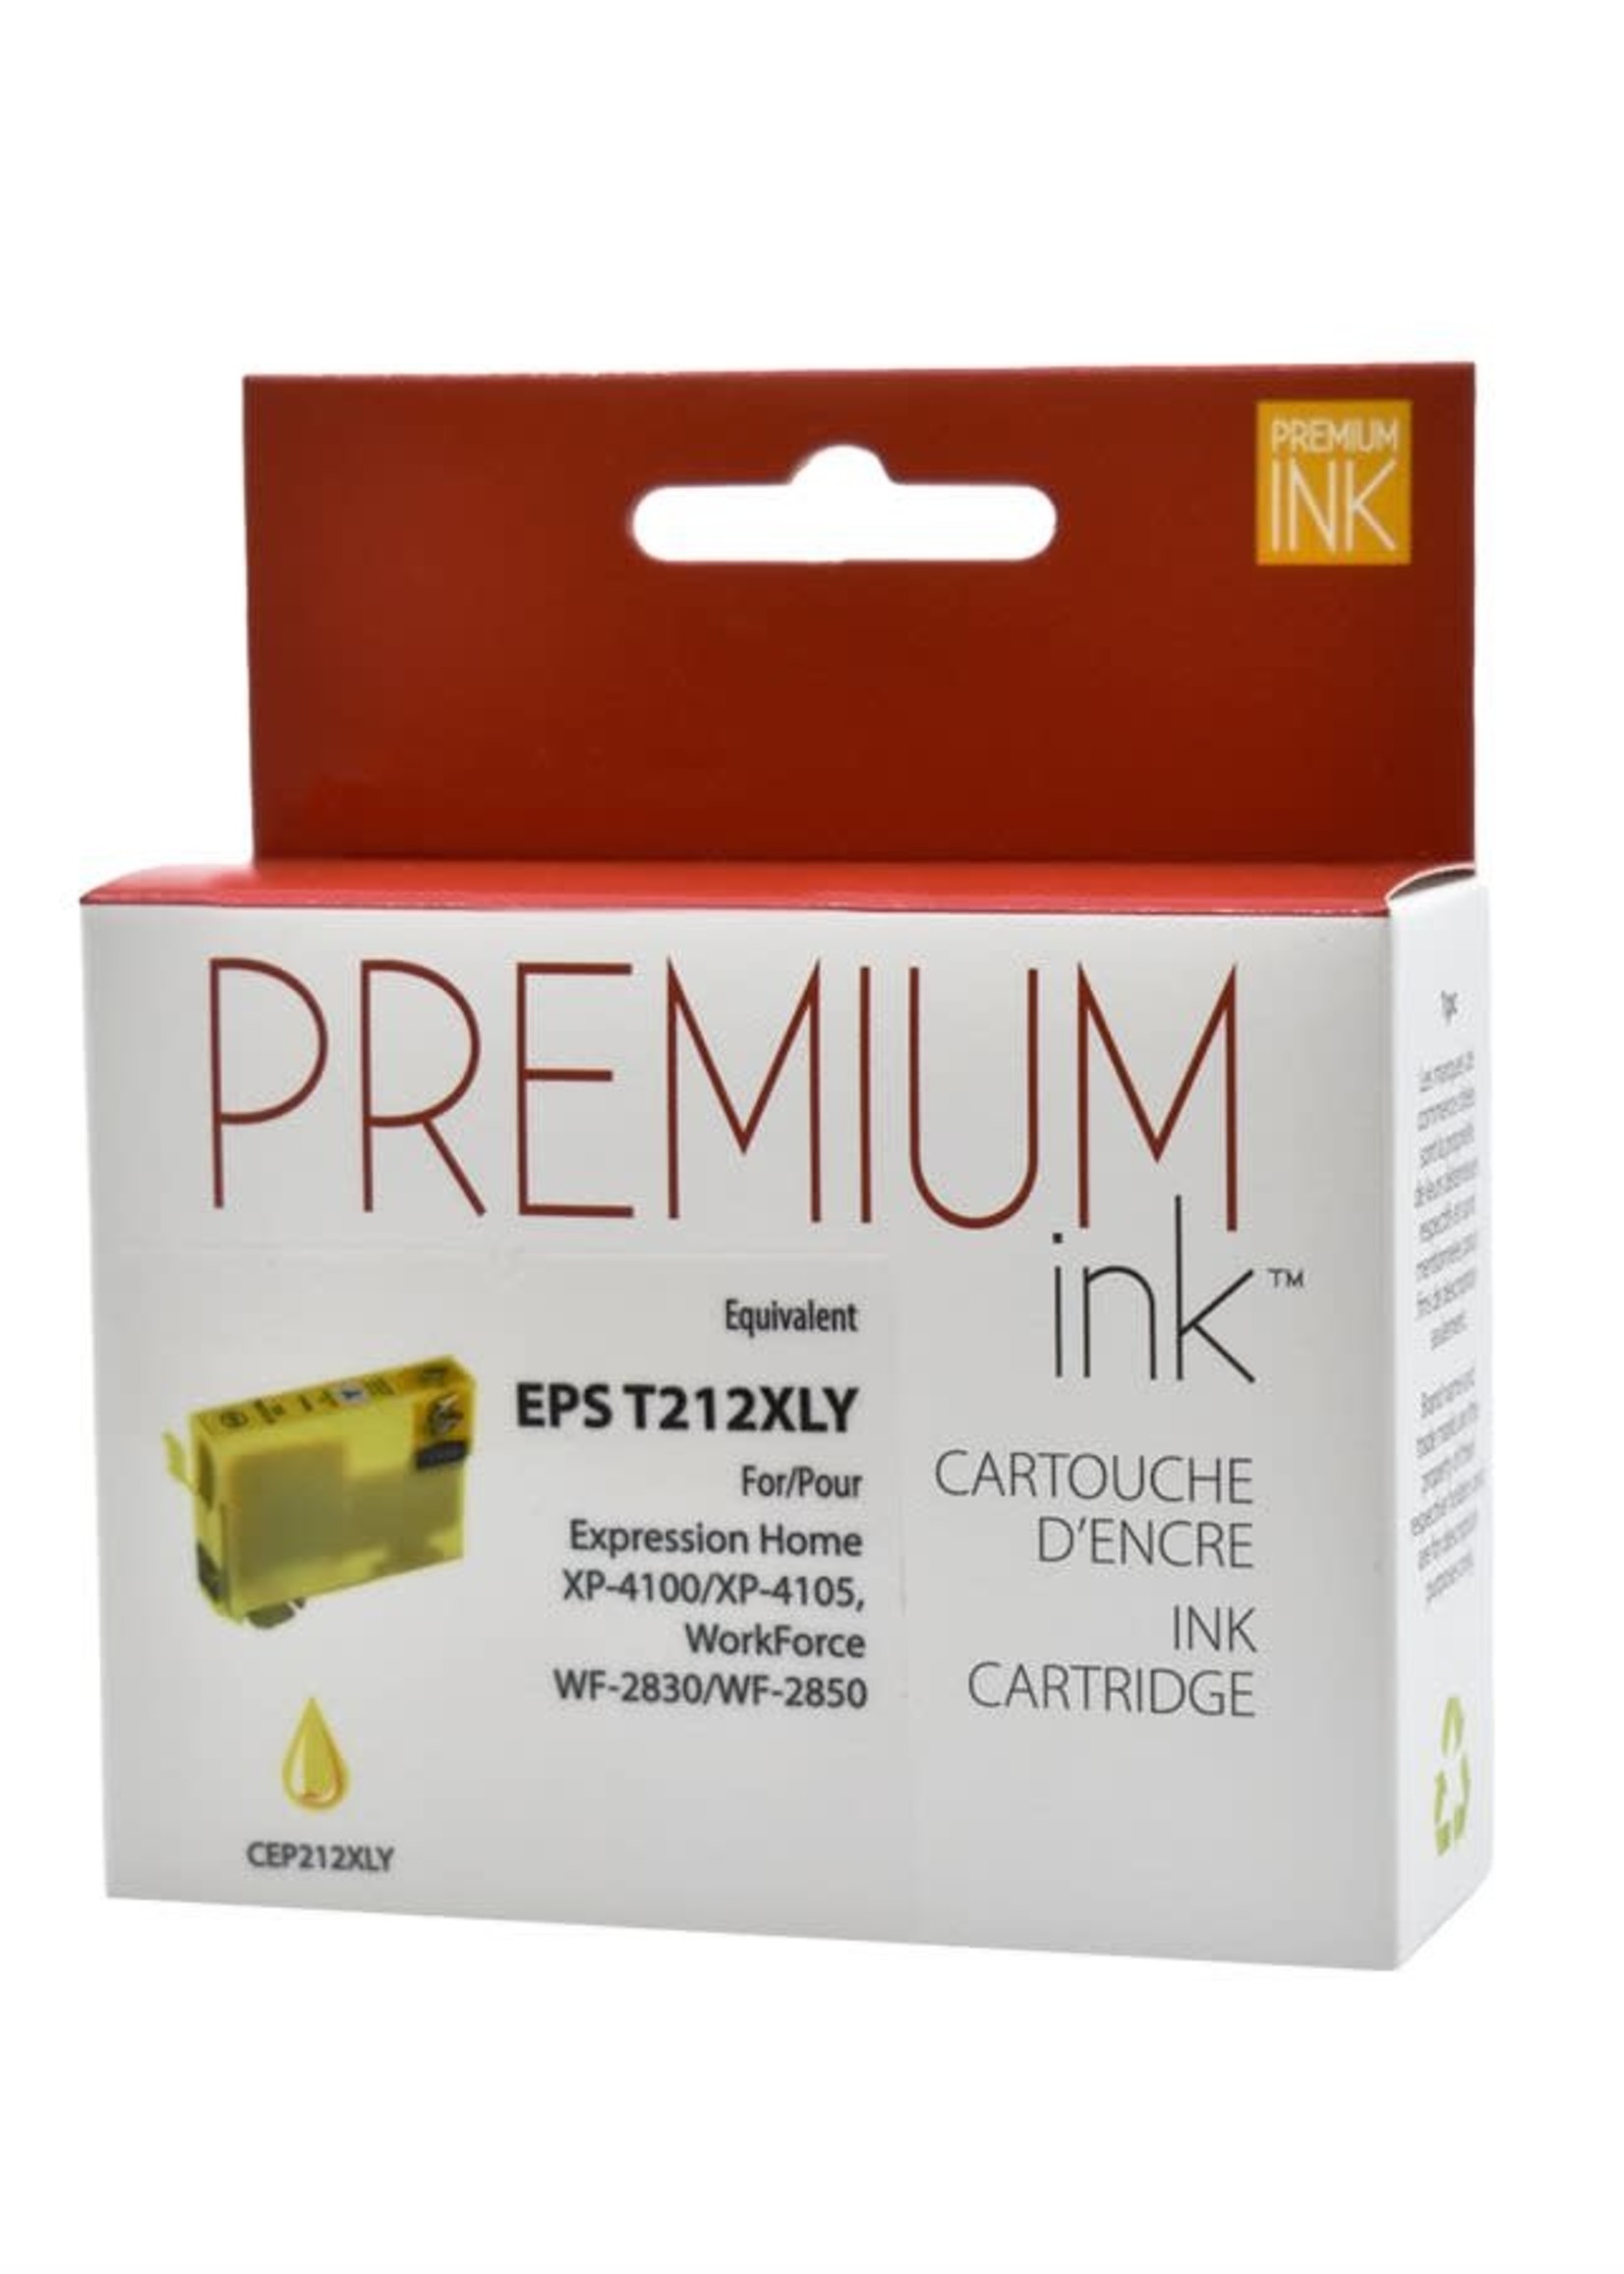 EPS T212XL Y PREMIUM INK